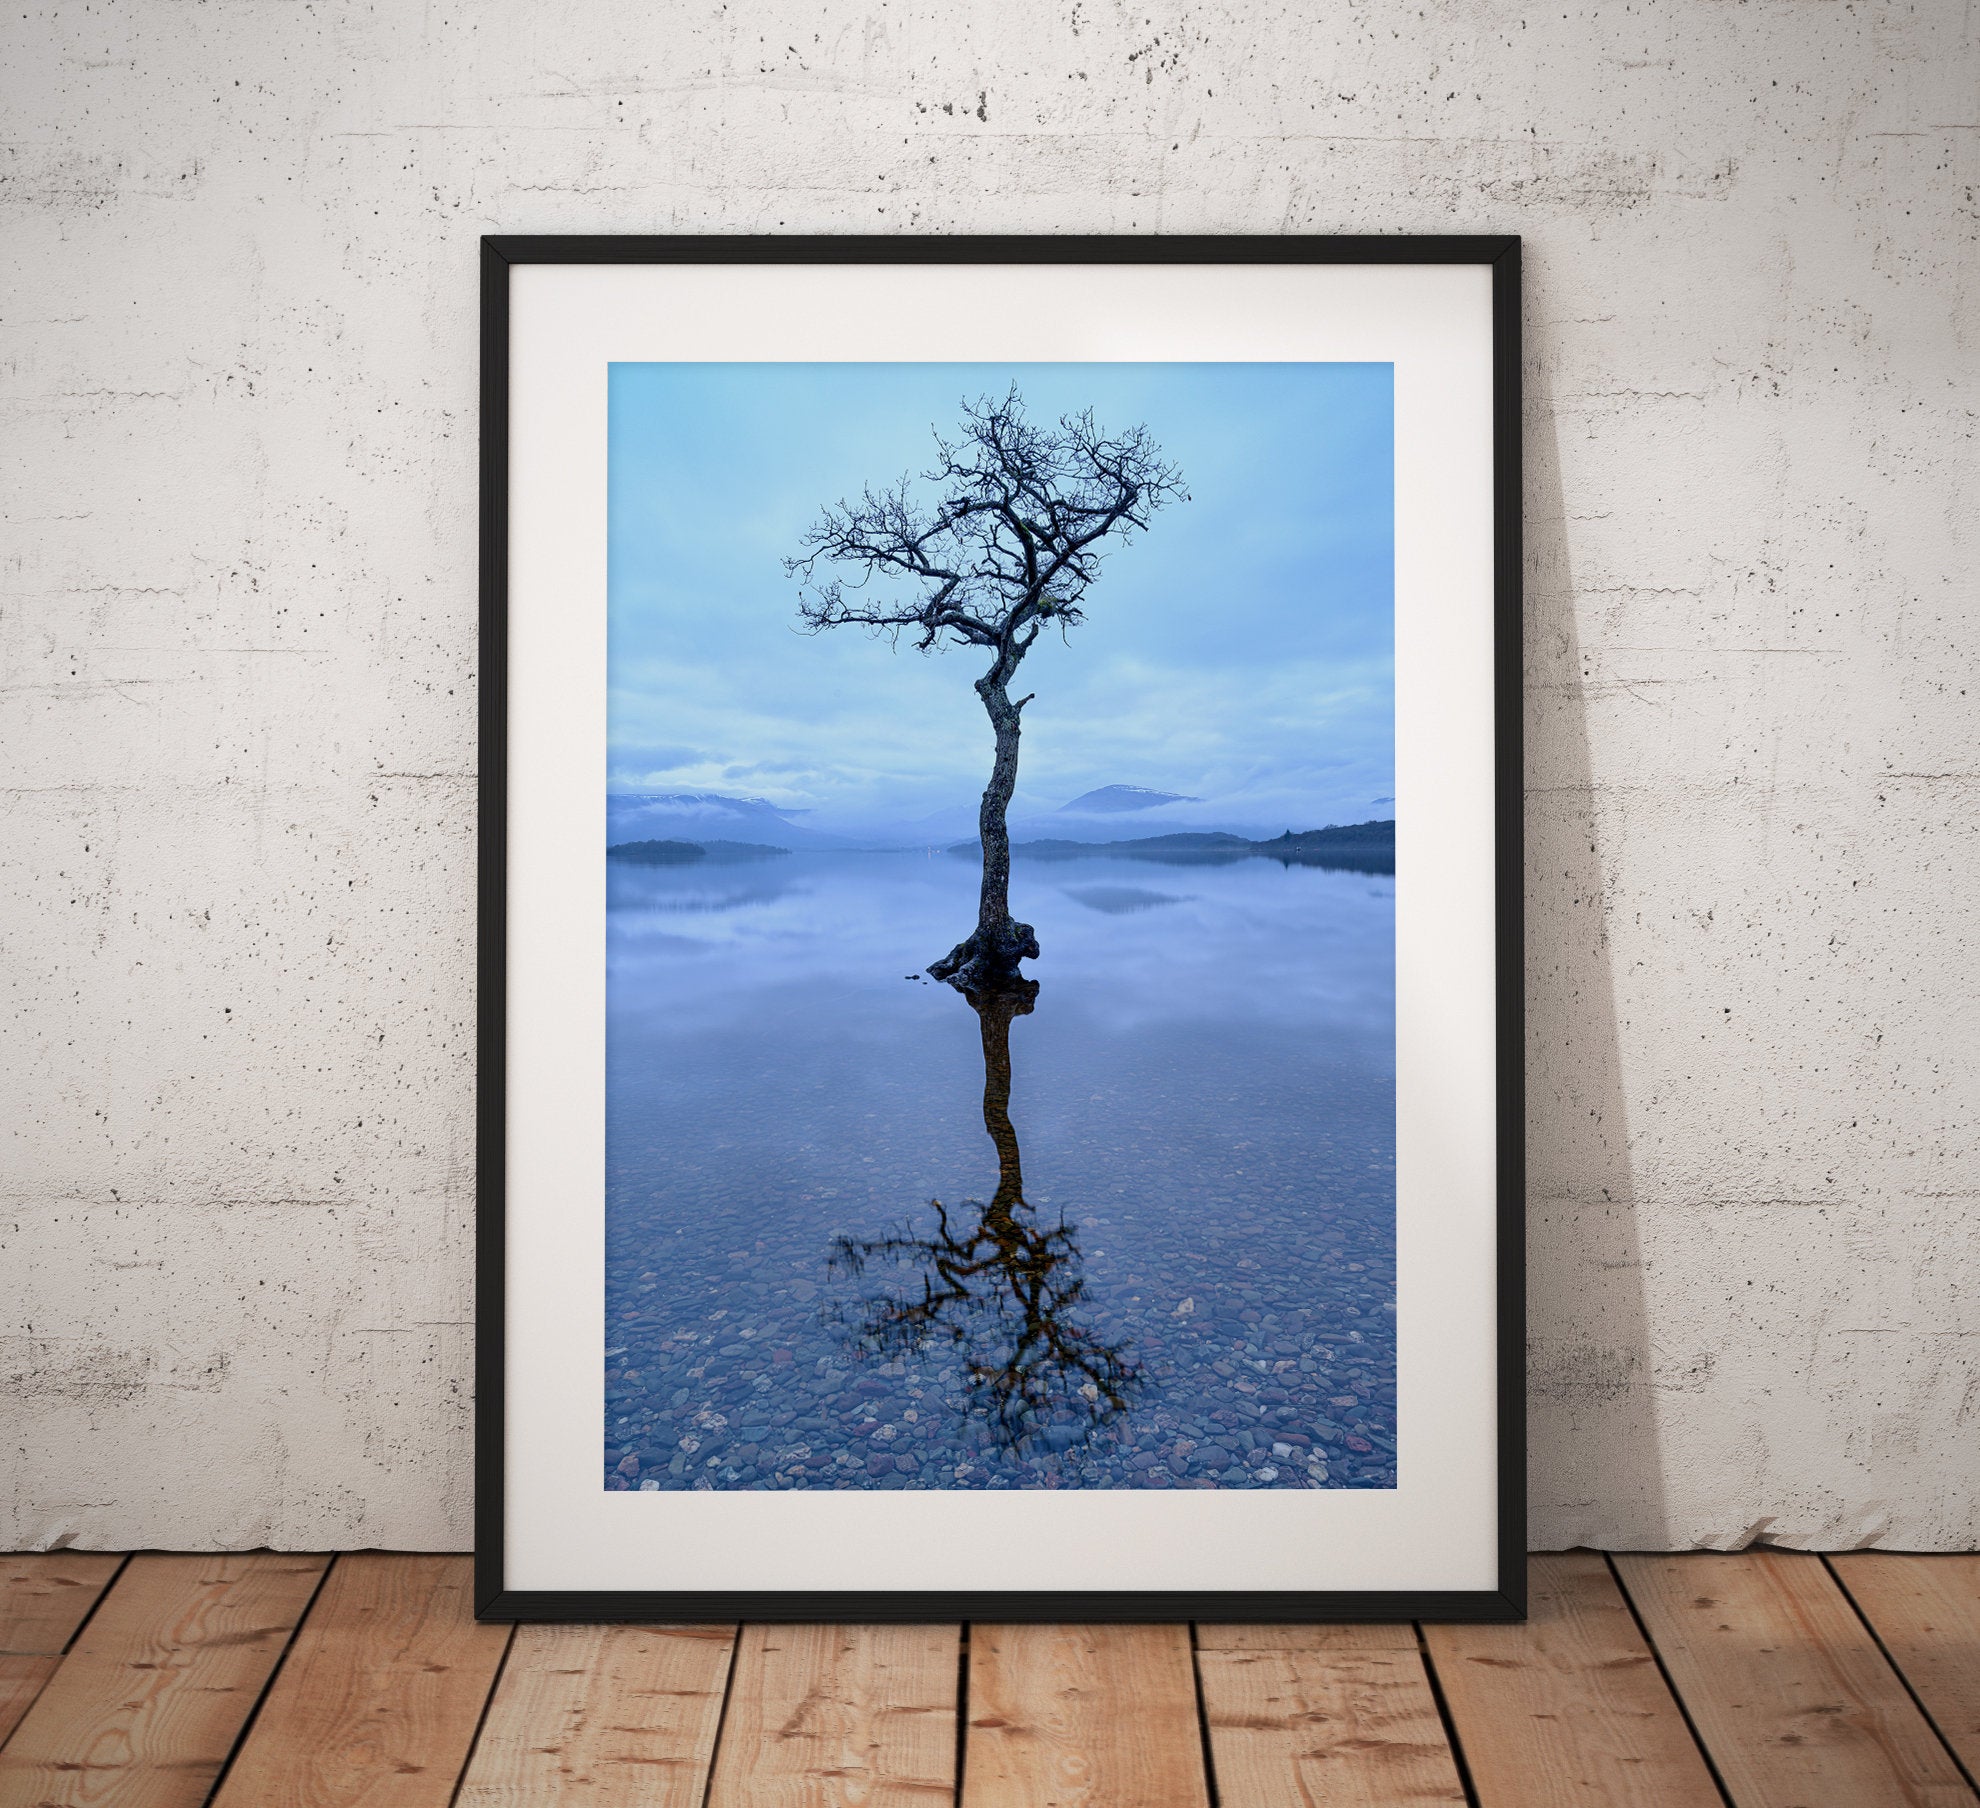 Scotland Landscape photograph, Loch Lomond lone tree reflection misty scene. Beautiful Scottish highlands. Wall art, fine art print